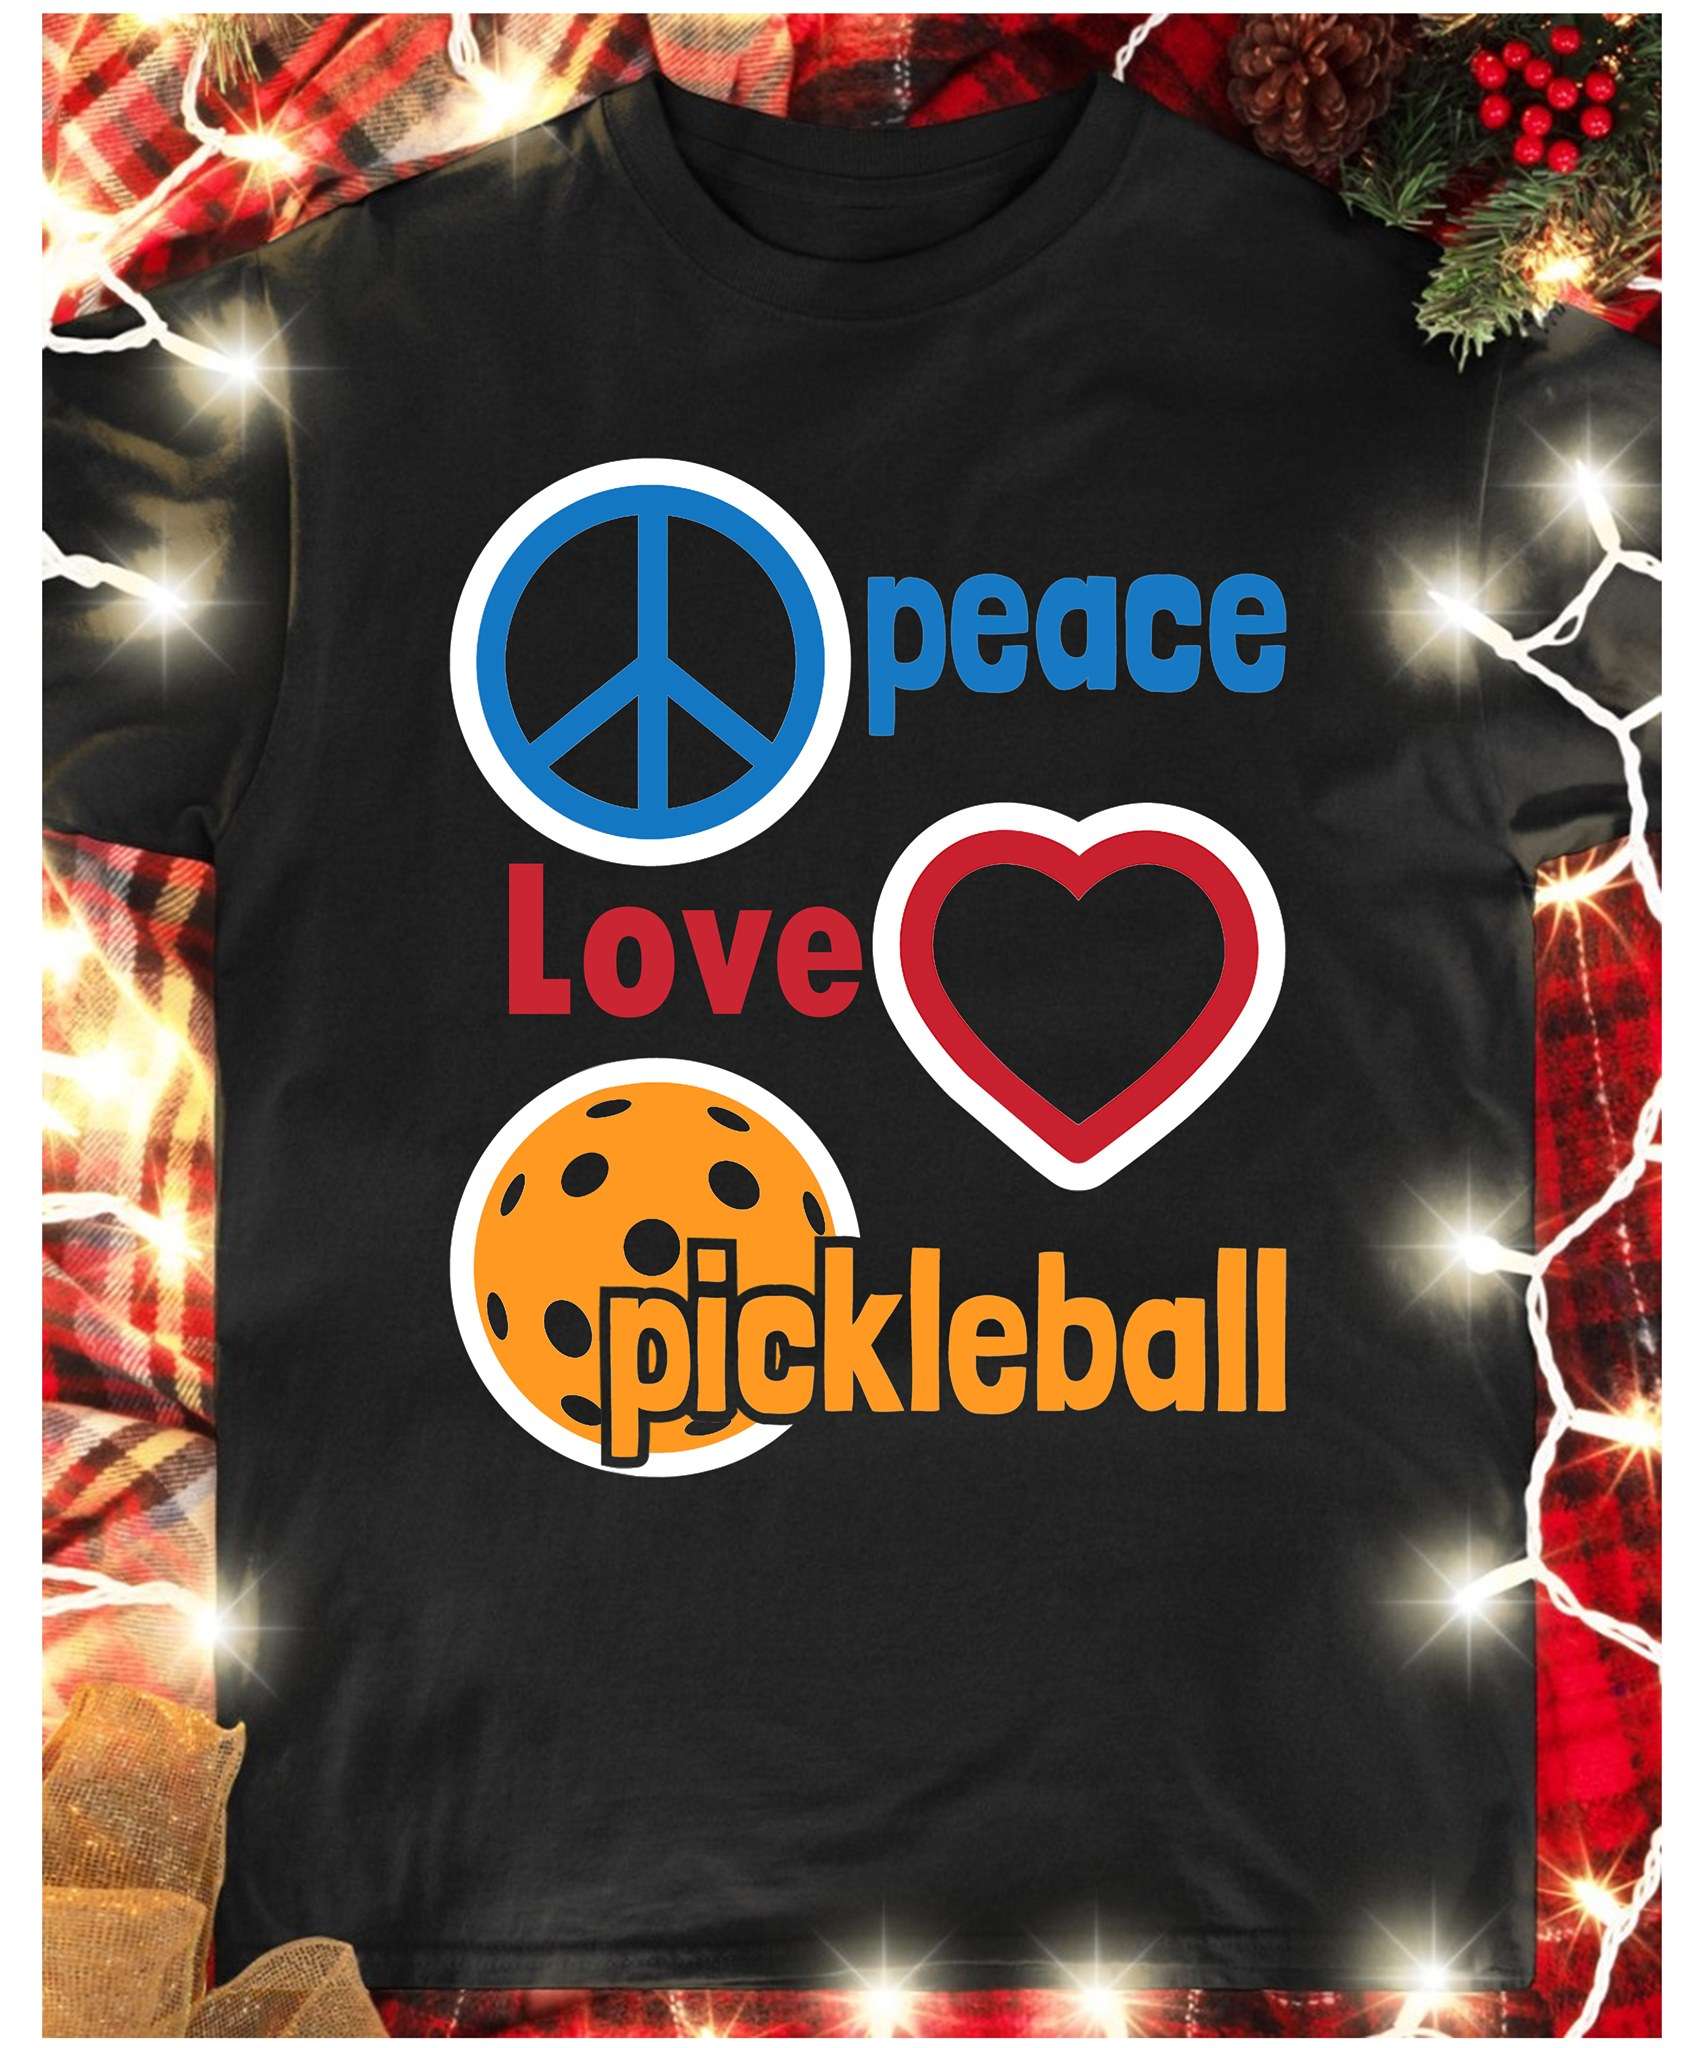 Peace love pickleball - Love playing pickleball, Peaceful life symbol